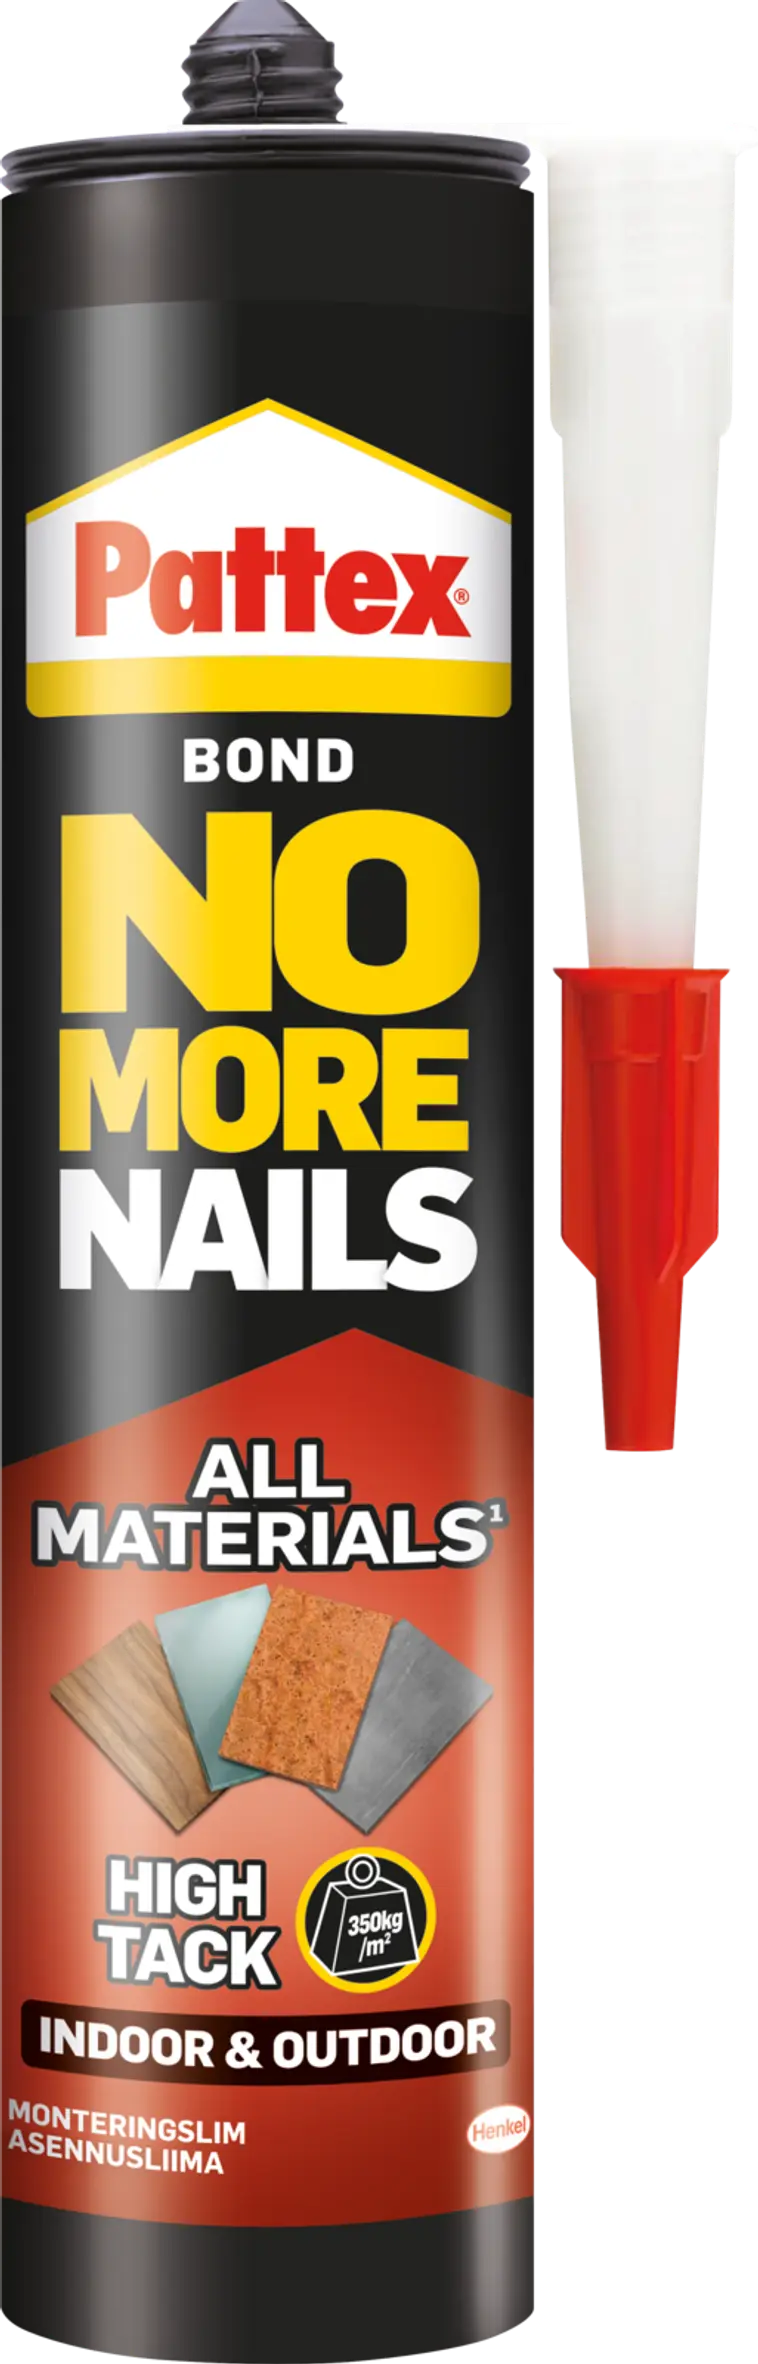 Pattex asennusliima No More Nails All Material High Tack 440gr